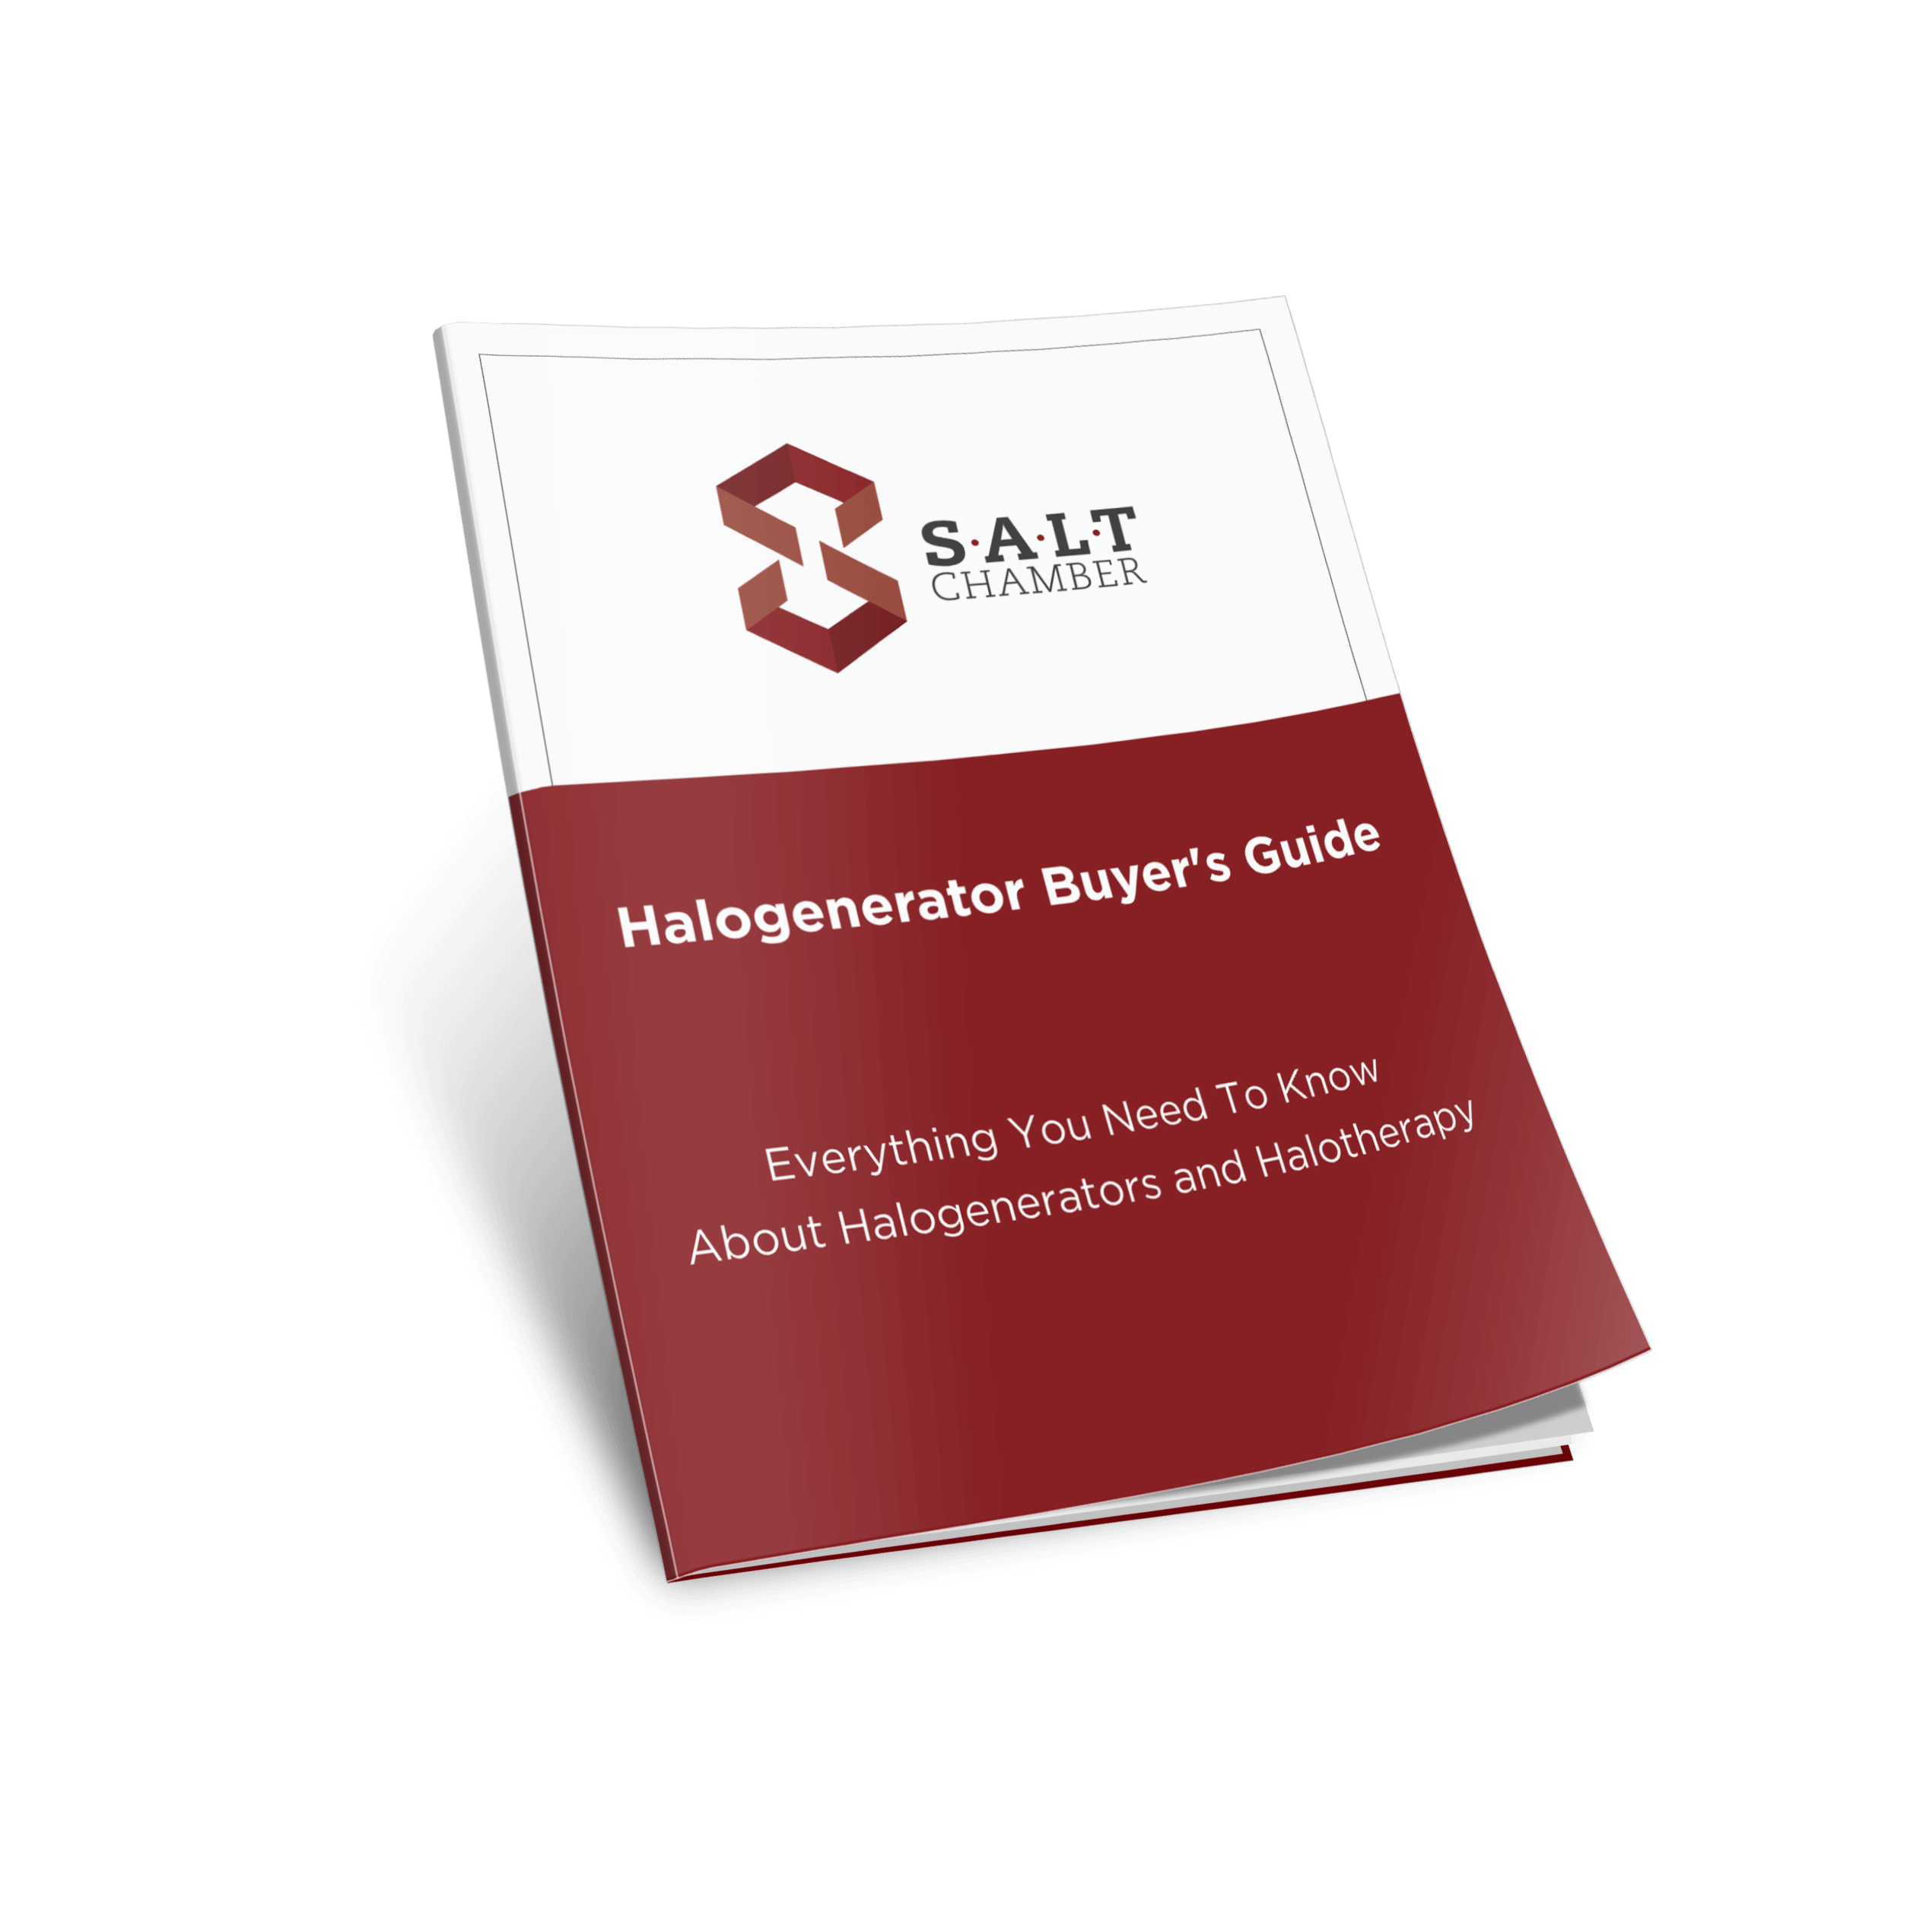 Halogenerator Buyer’s Guide